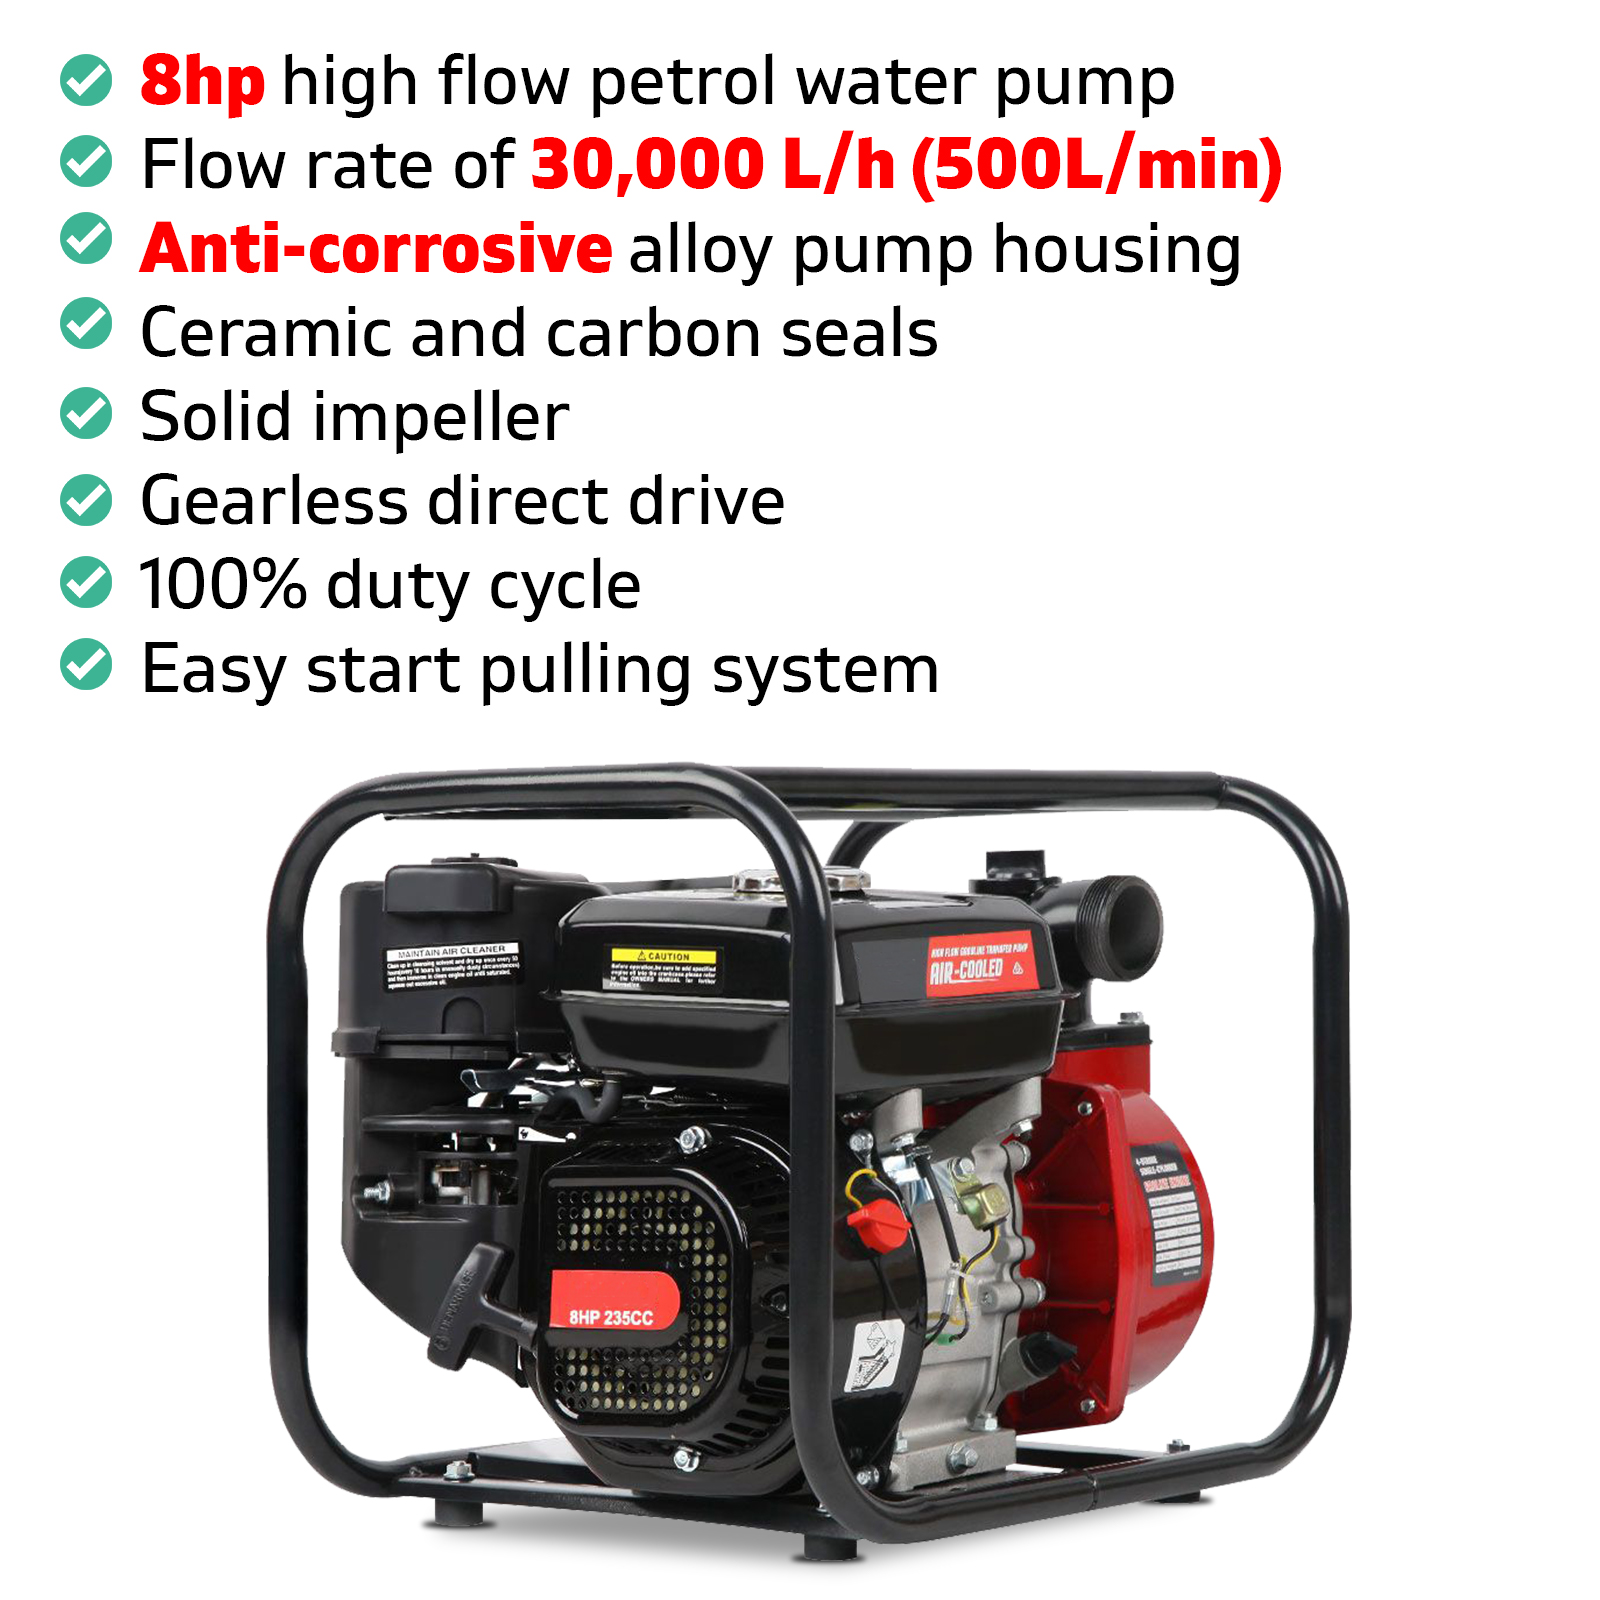 2inch 3600RPM High Flow Water 235CC Pump 8HP- Black & Red